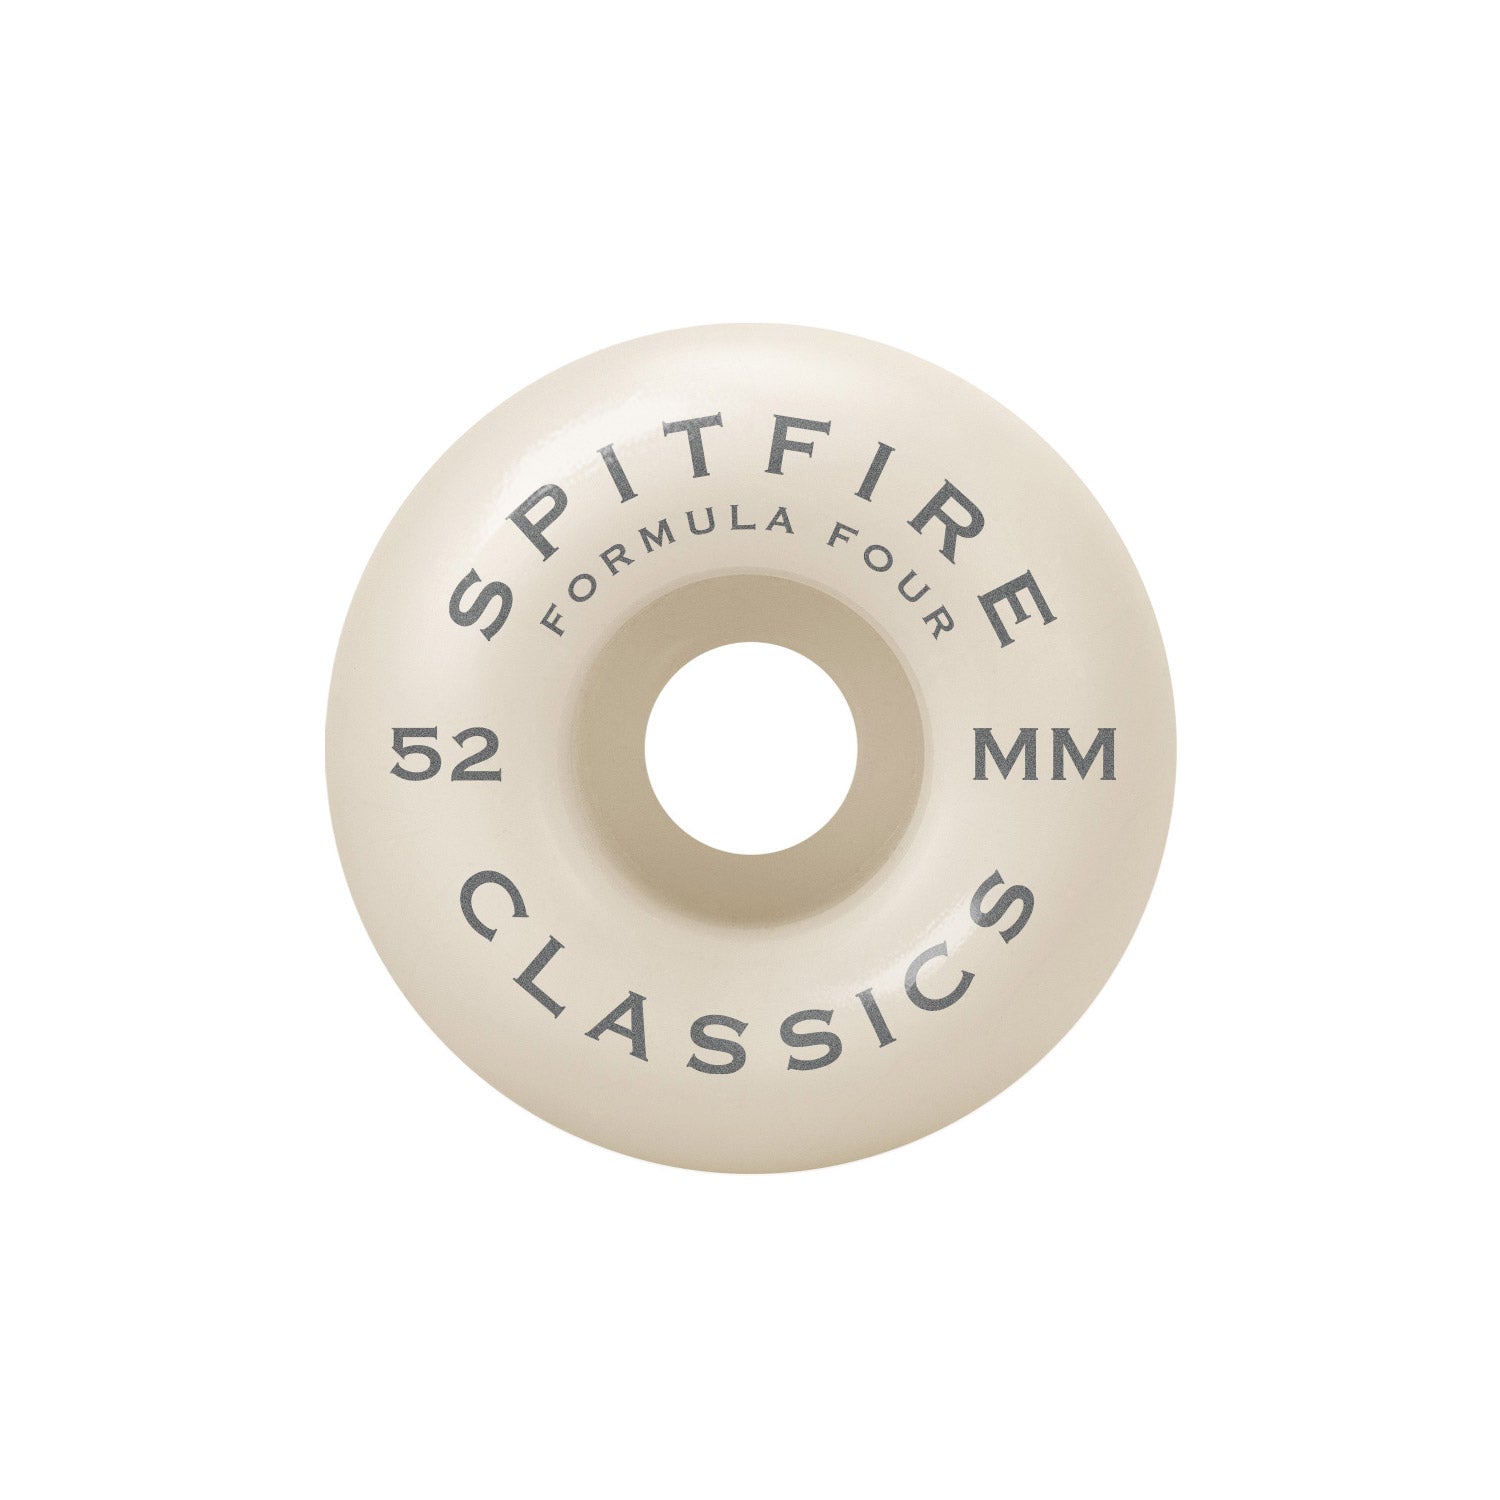 Spitfire Formula Four Classics wheel (99A, 52mm) - Tiki Room Skateboards - 2